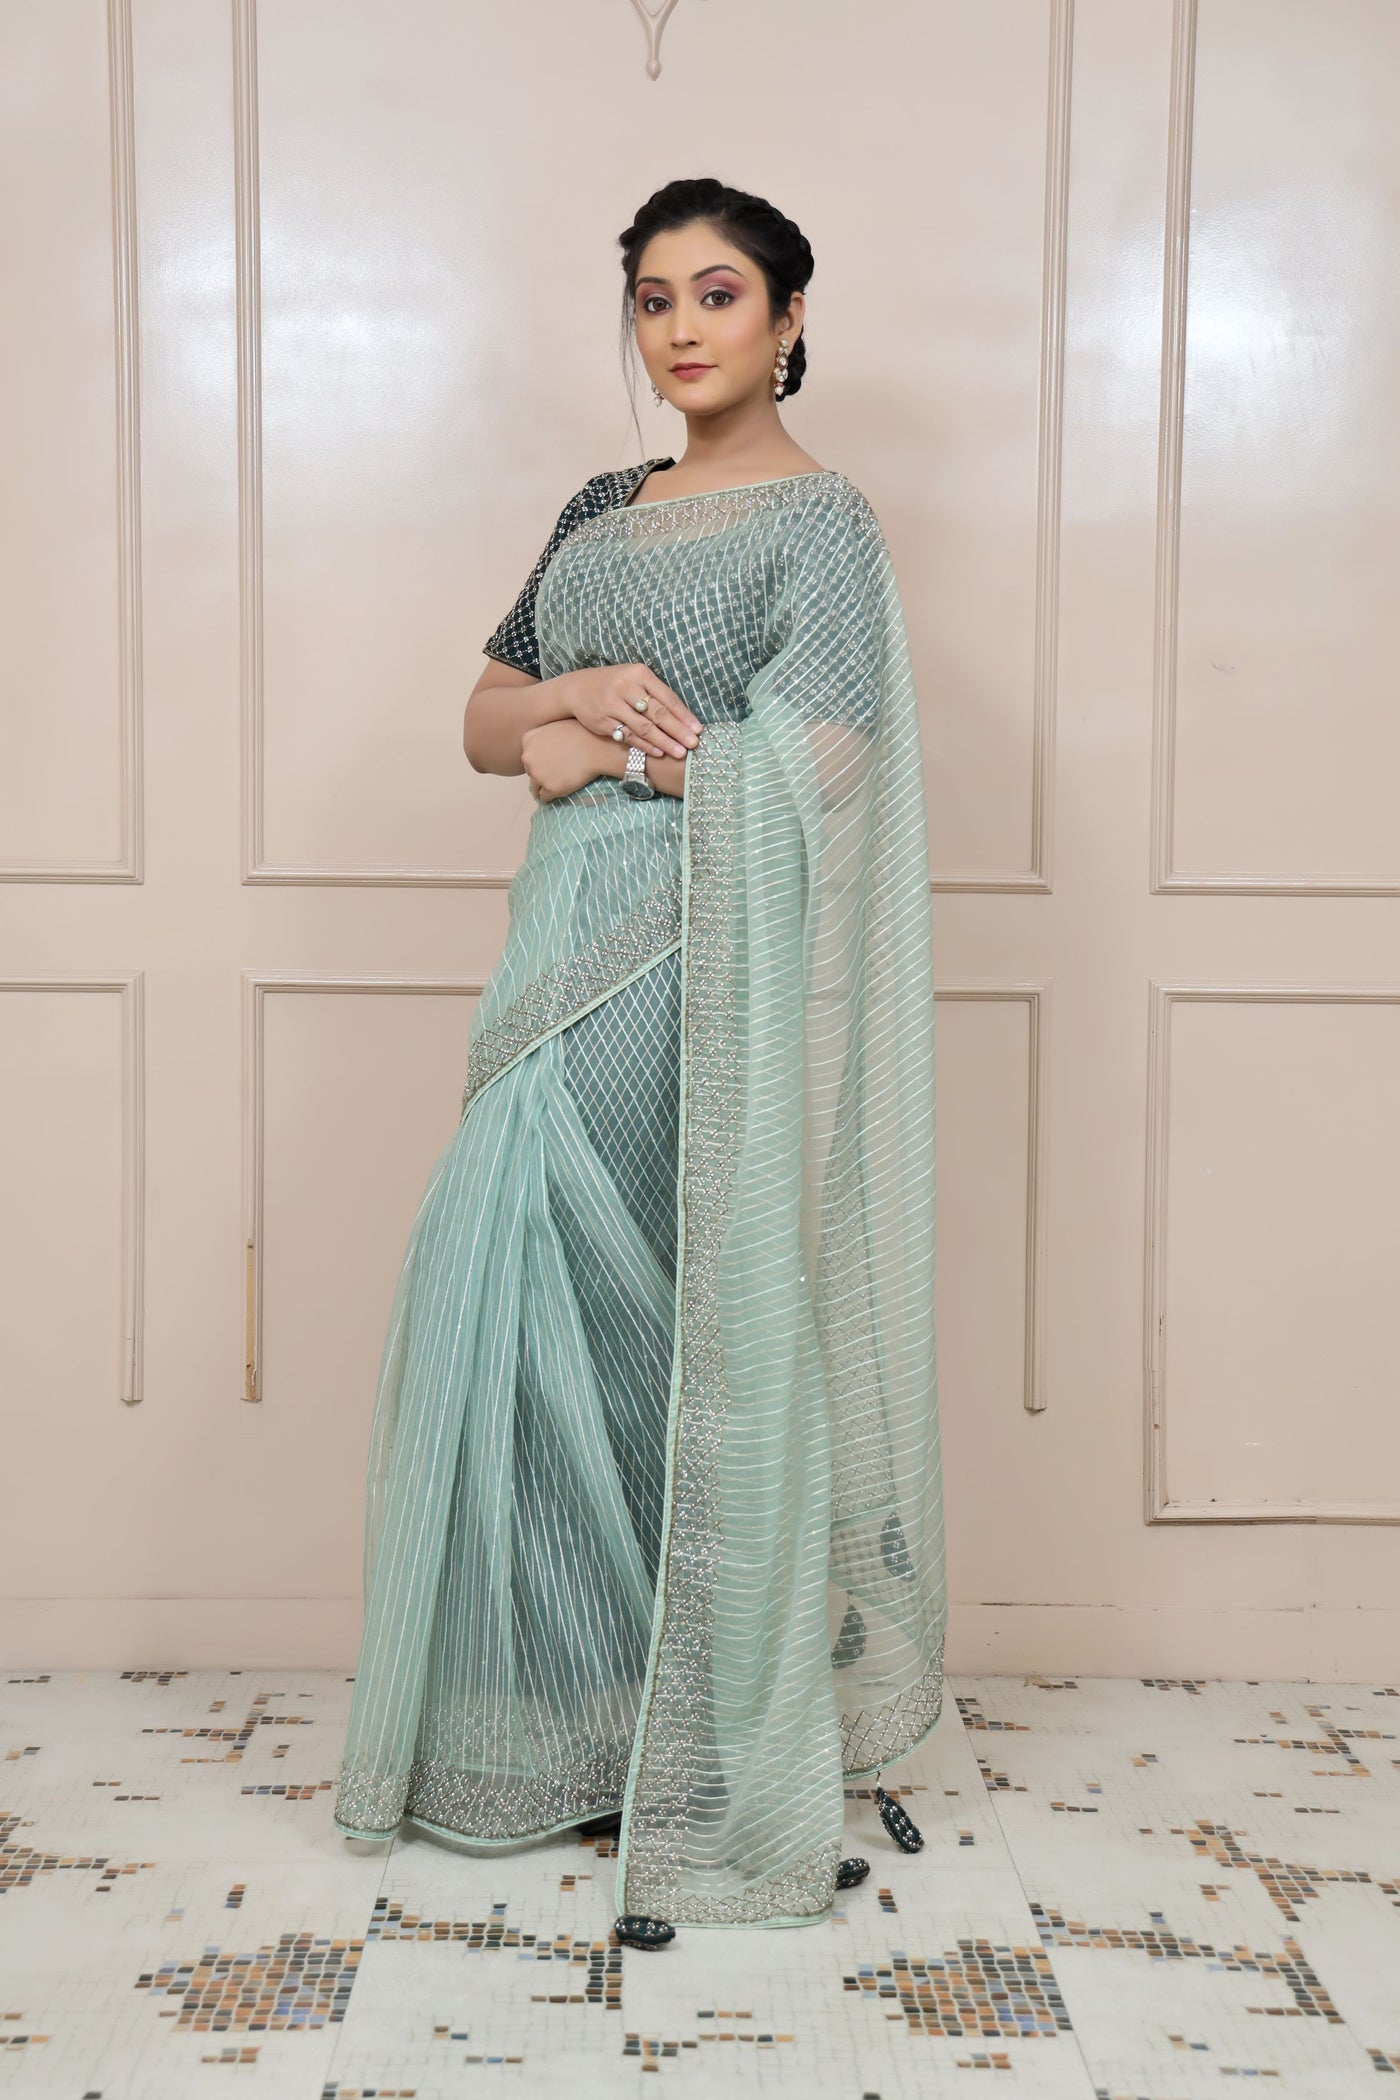 Classy aqua color geometrical motif embroidered saree